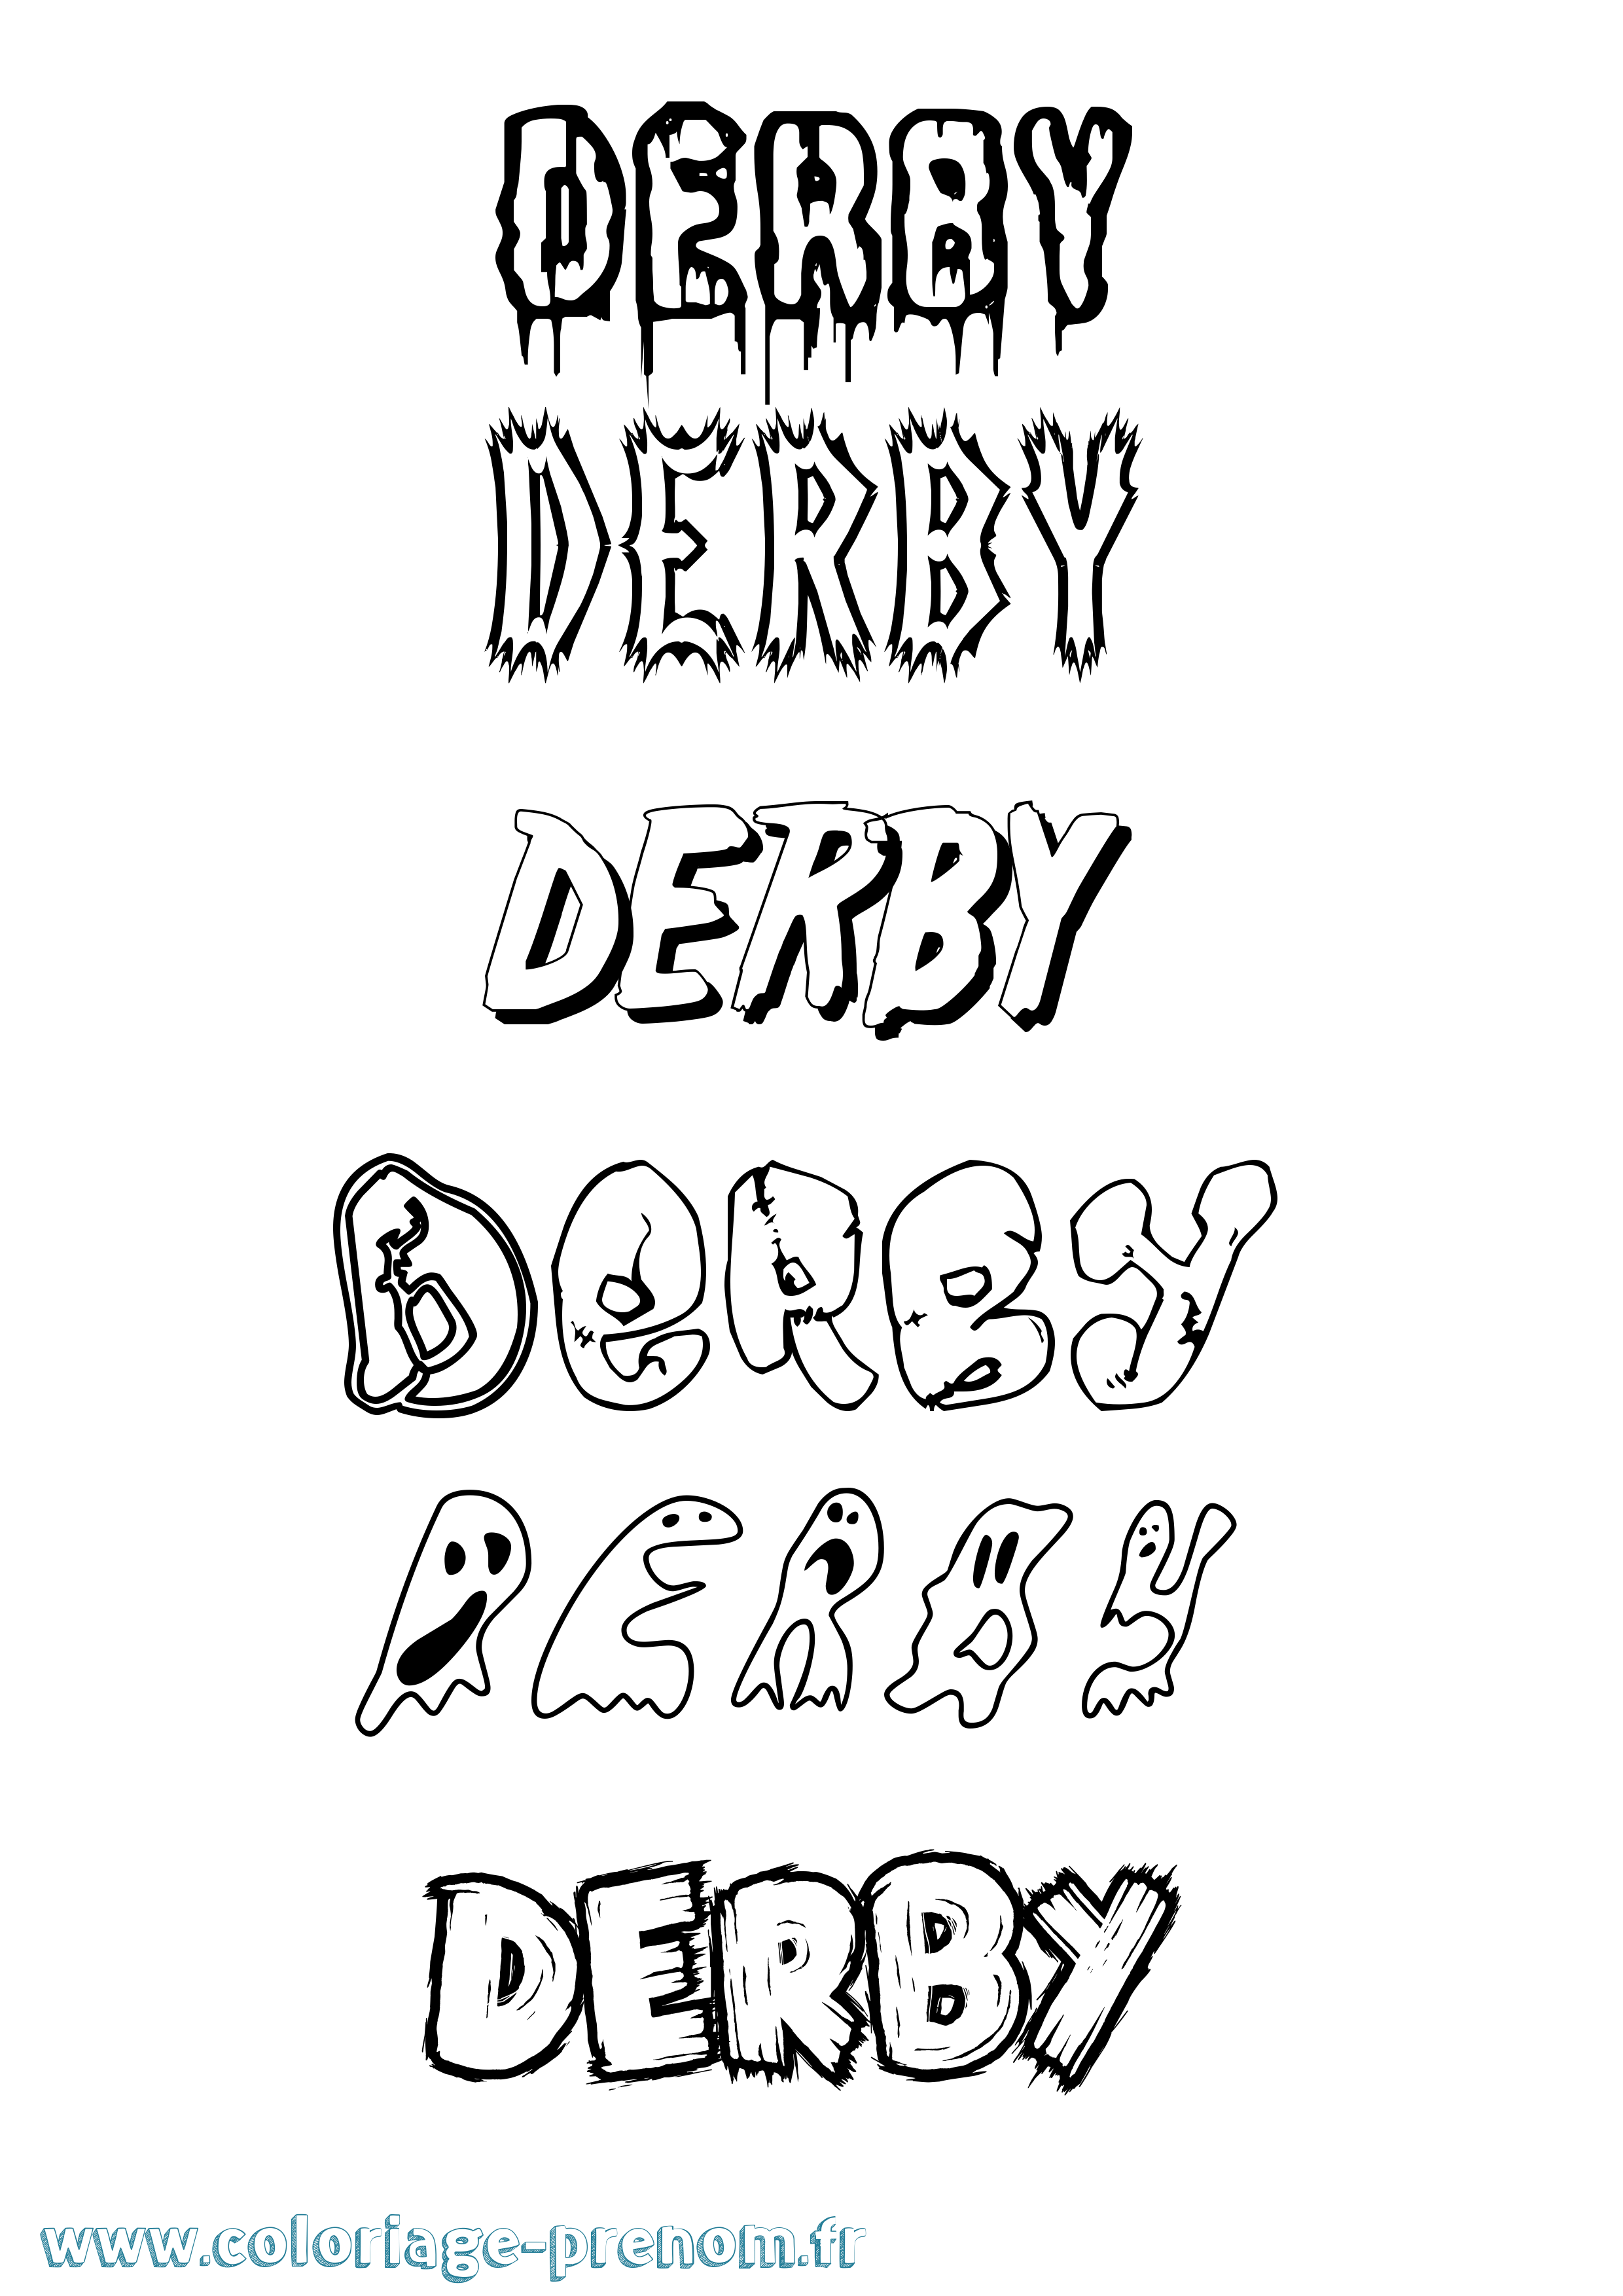 Coloriage prénom Derby Frisson